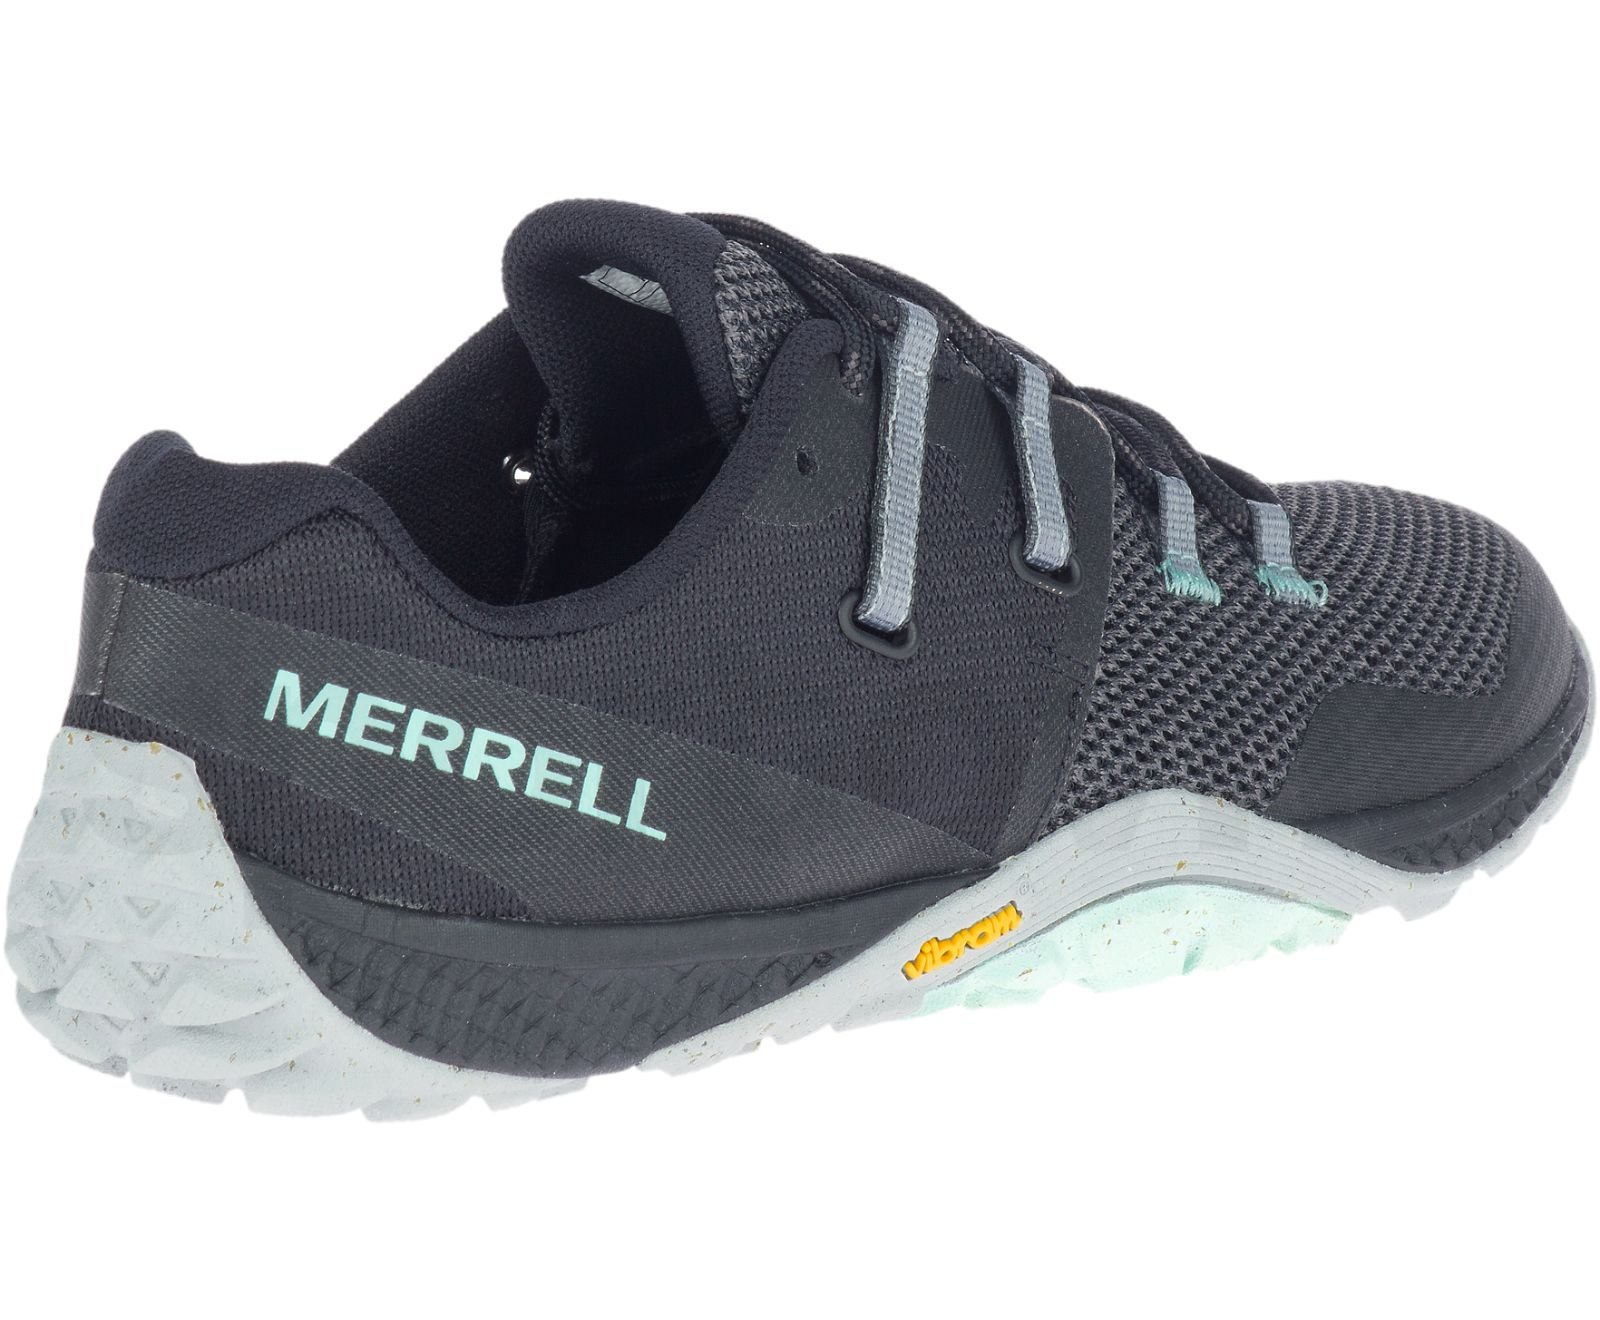 Obuv Merrell Trail Glove 6 W - černá